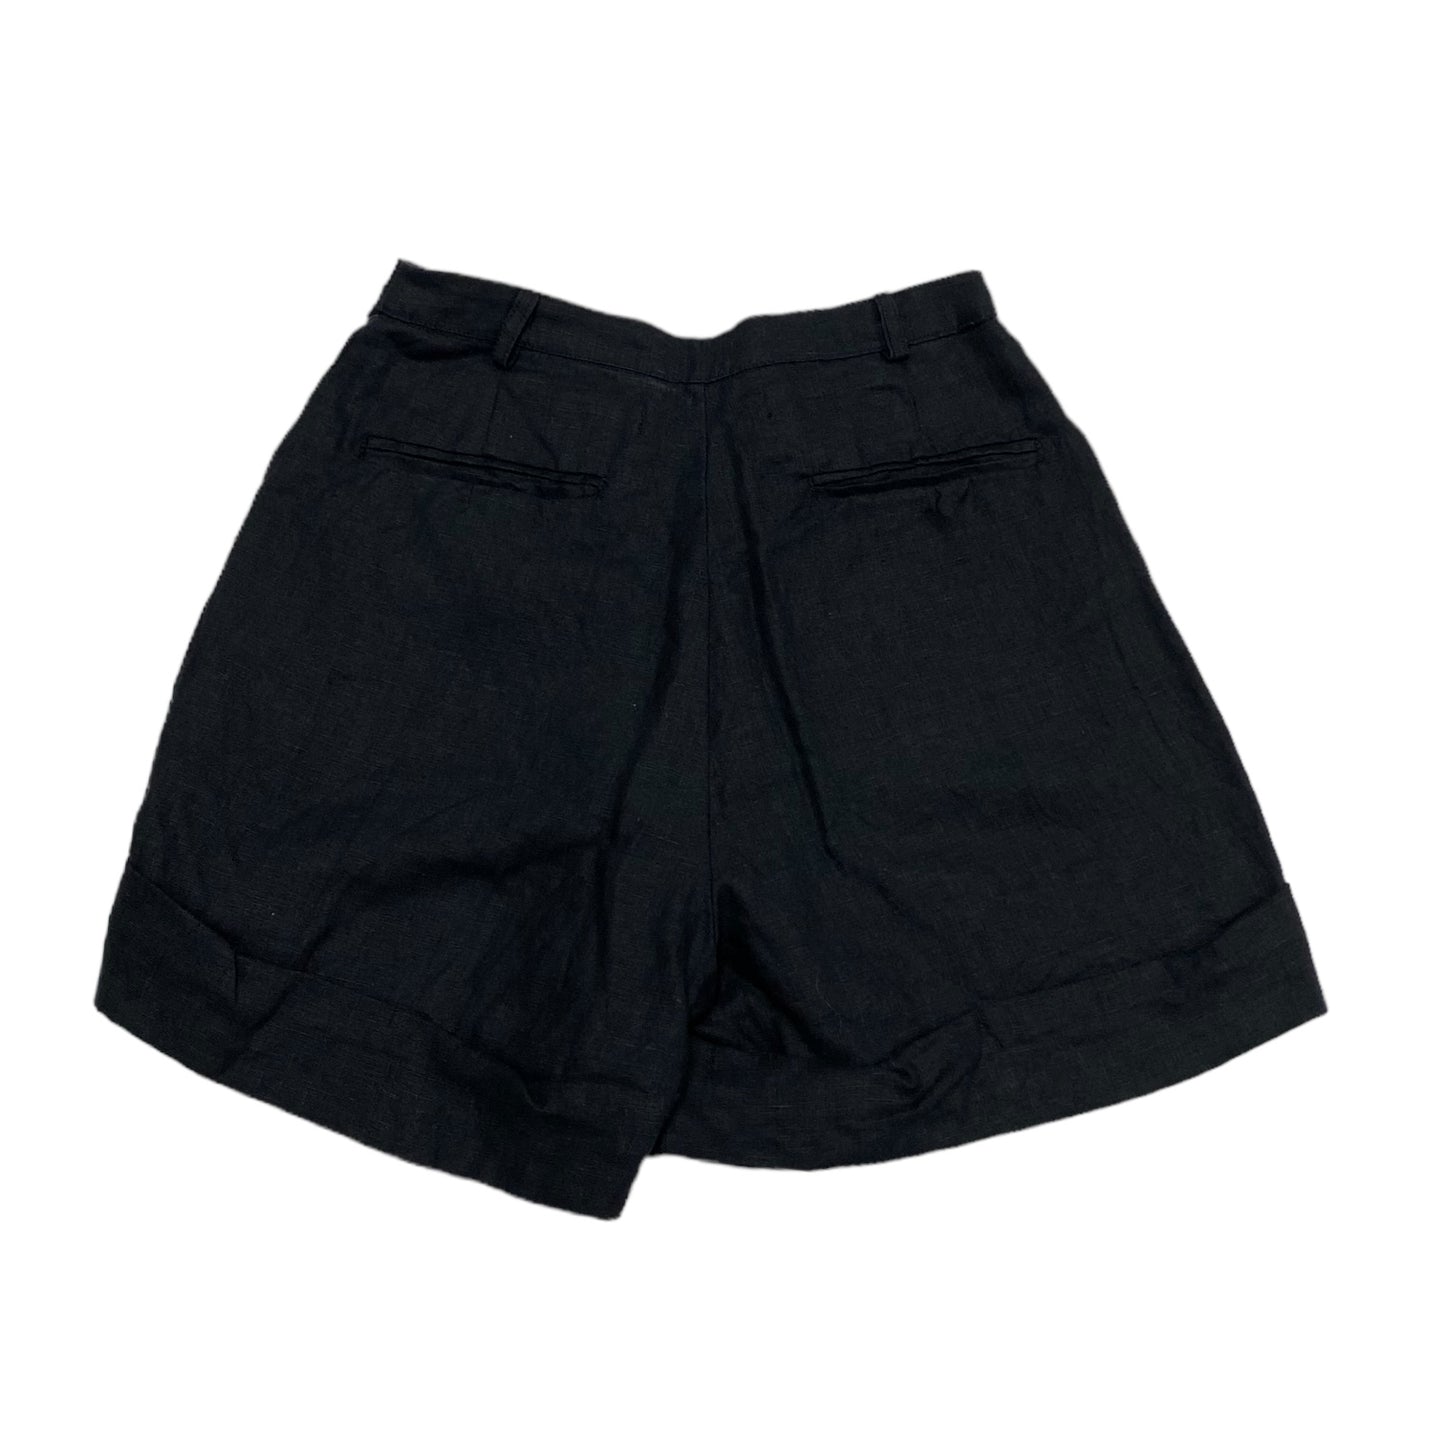 Shorts By Faithfull The Brand  Size: 2